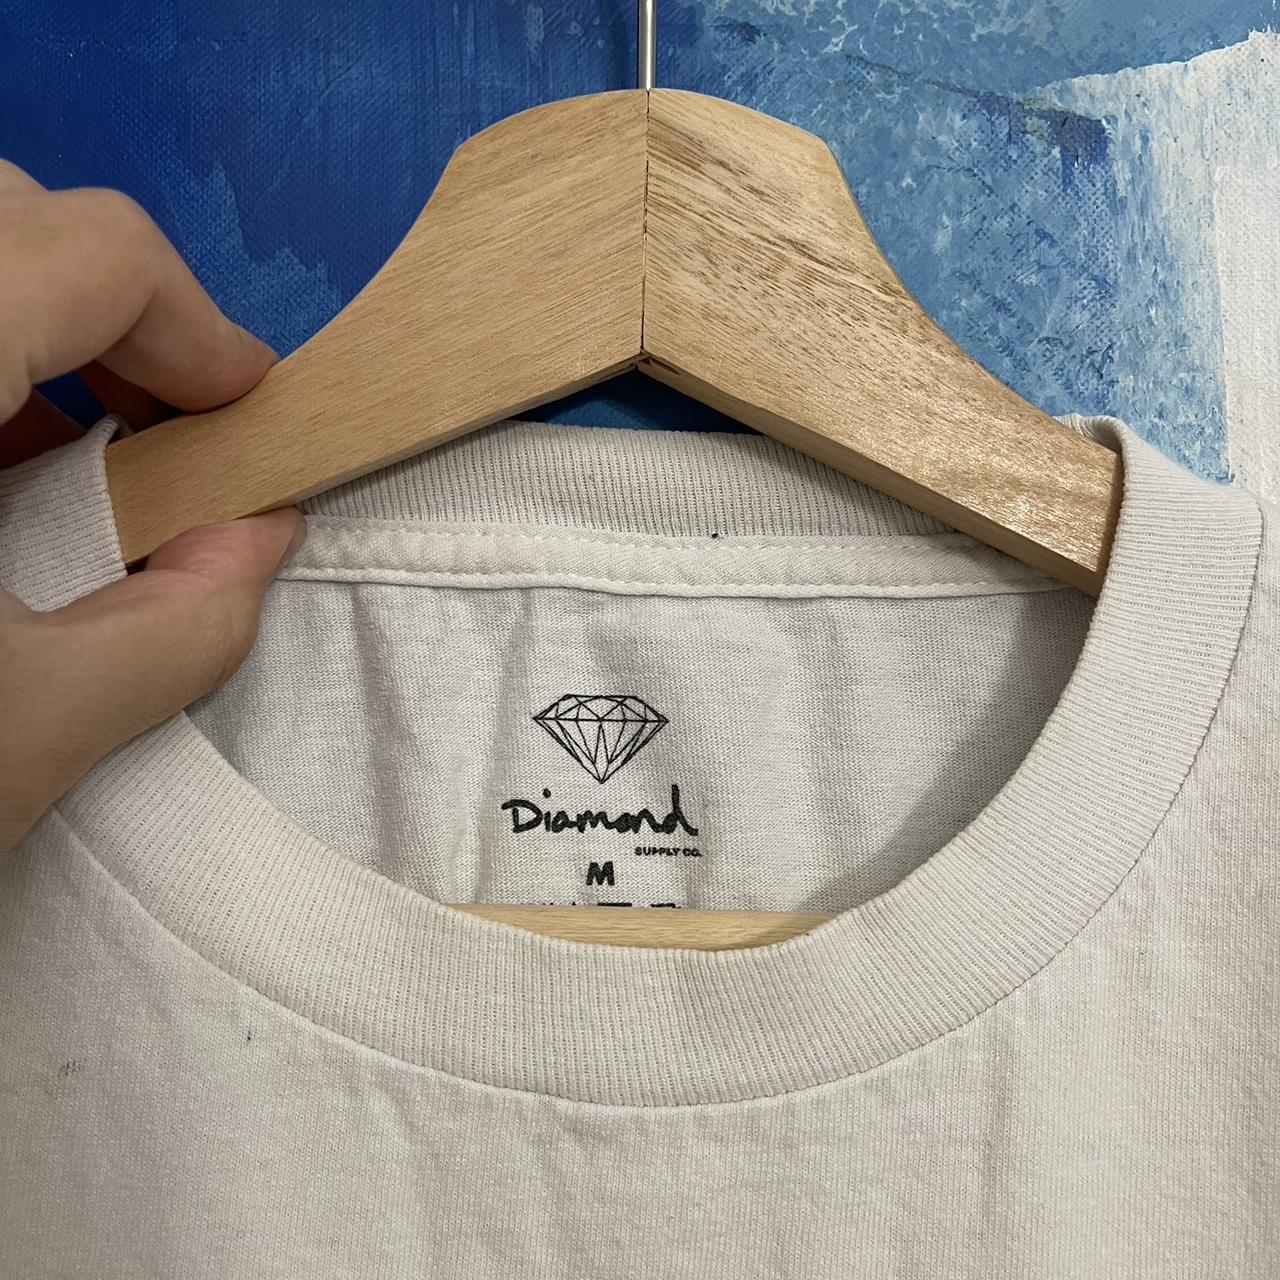 Diamond Supply Co. Men's White and Blue T-shirt (4)